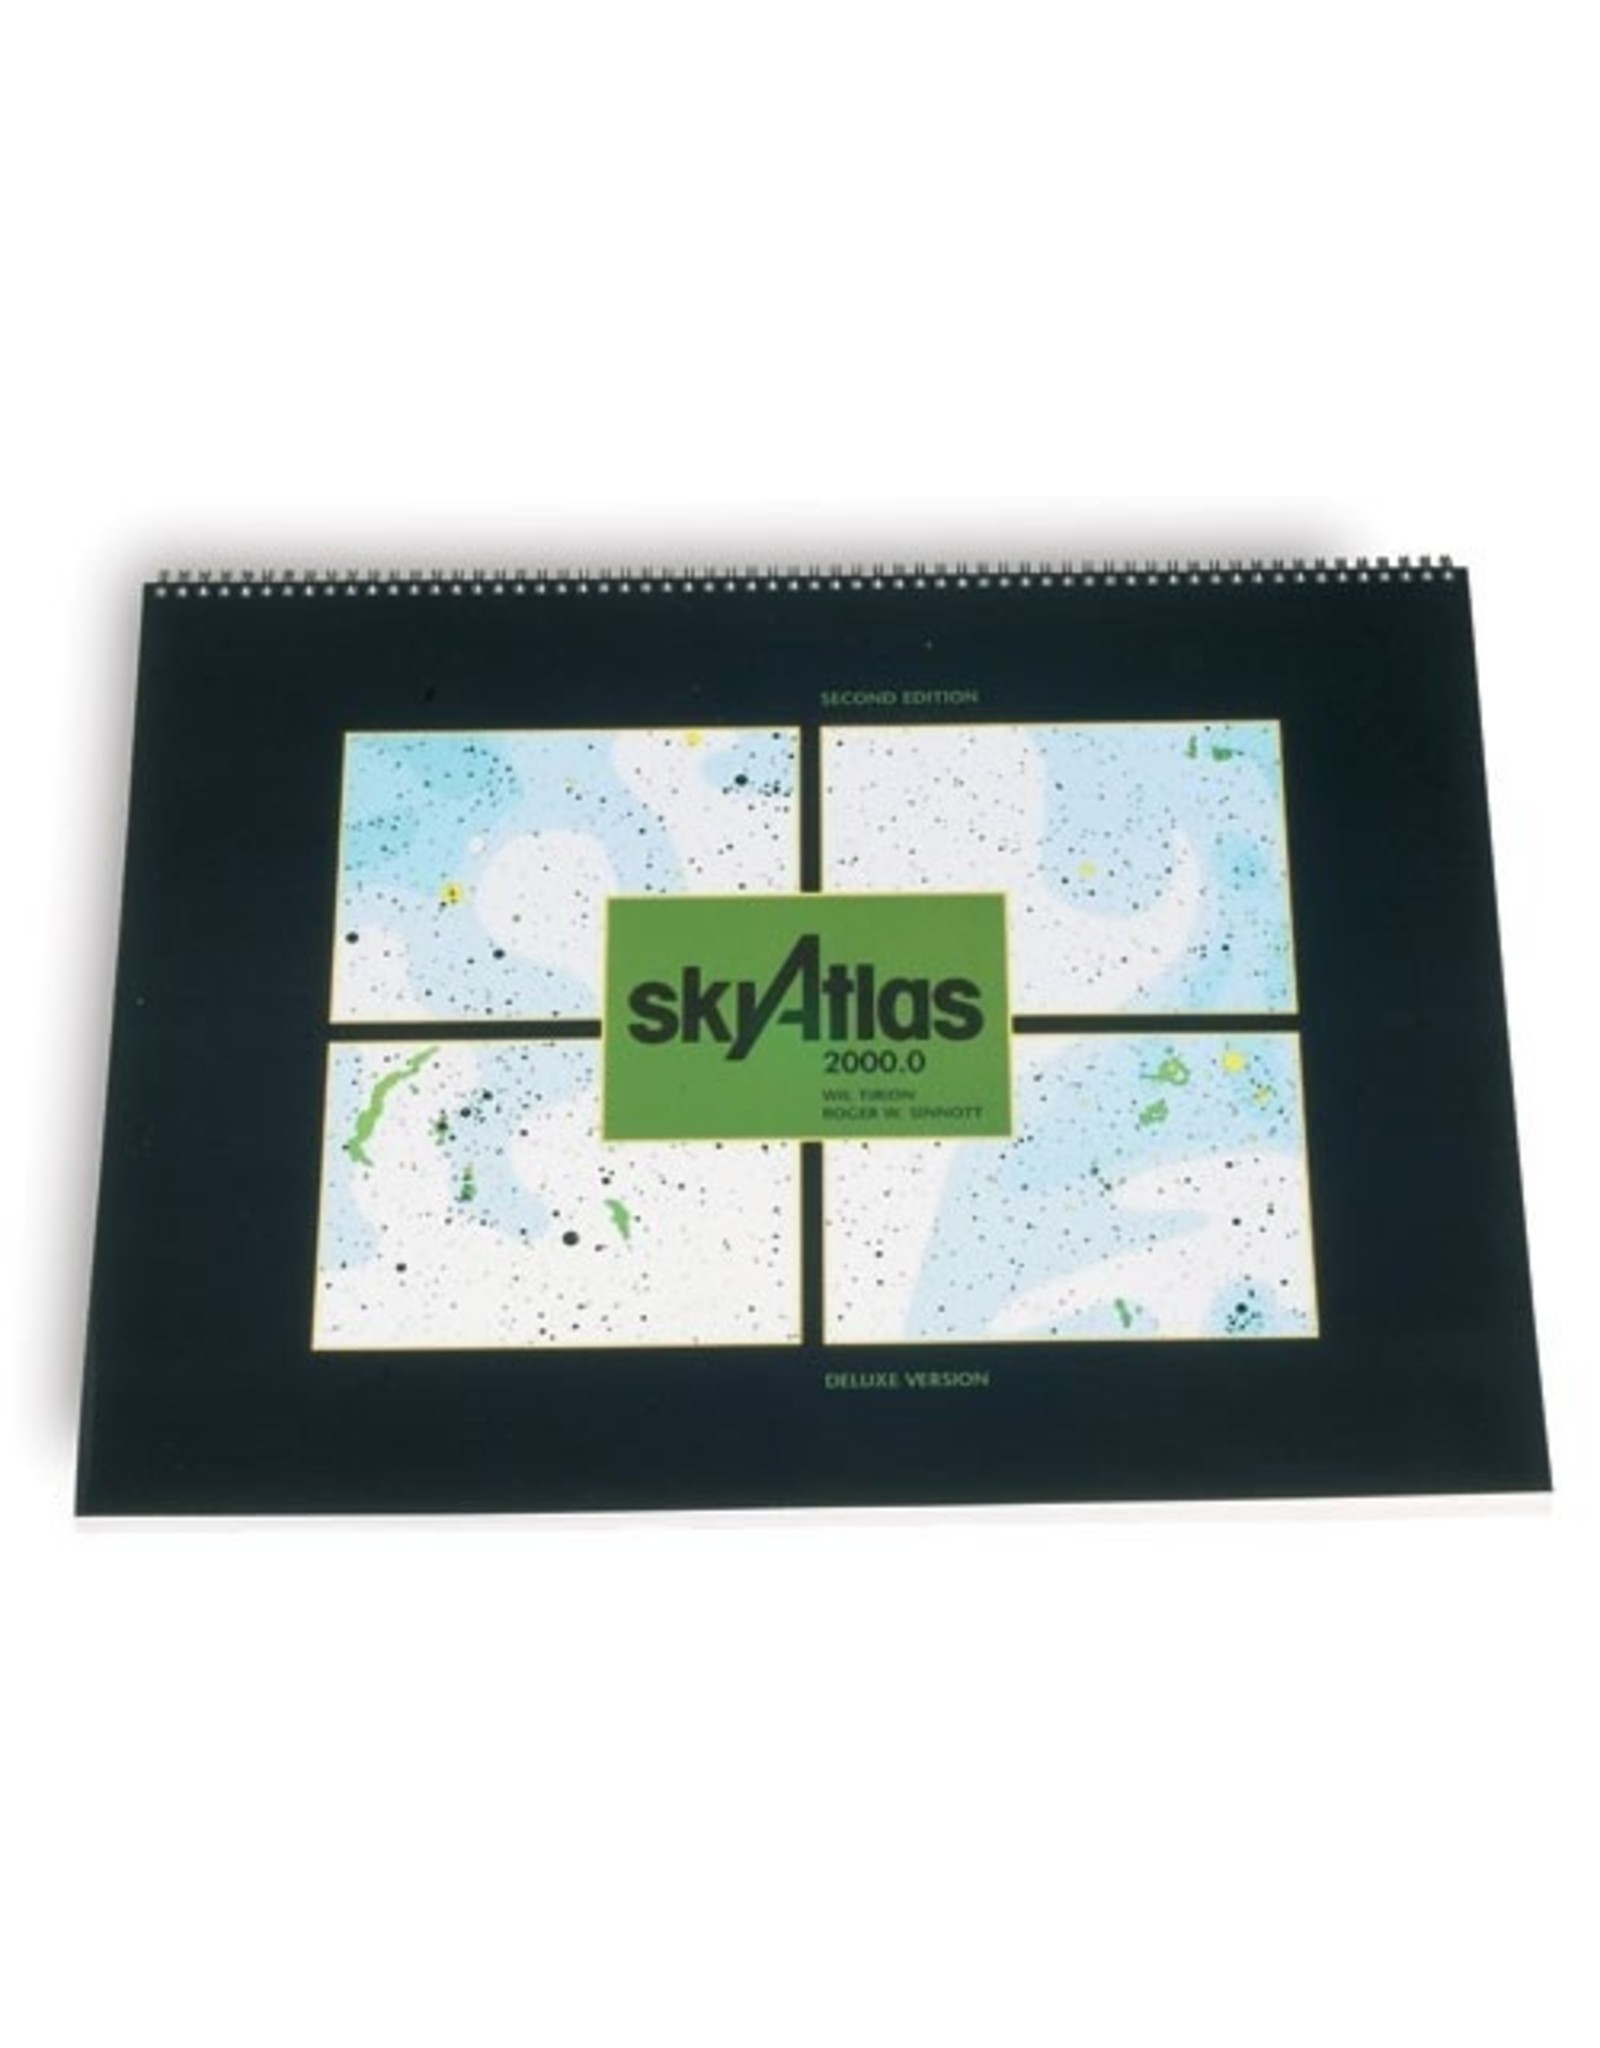 Sky atlas 20000 deluxe laminated